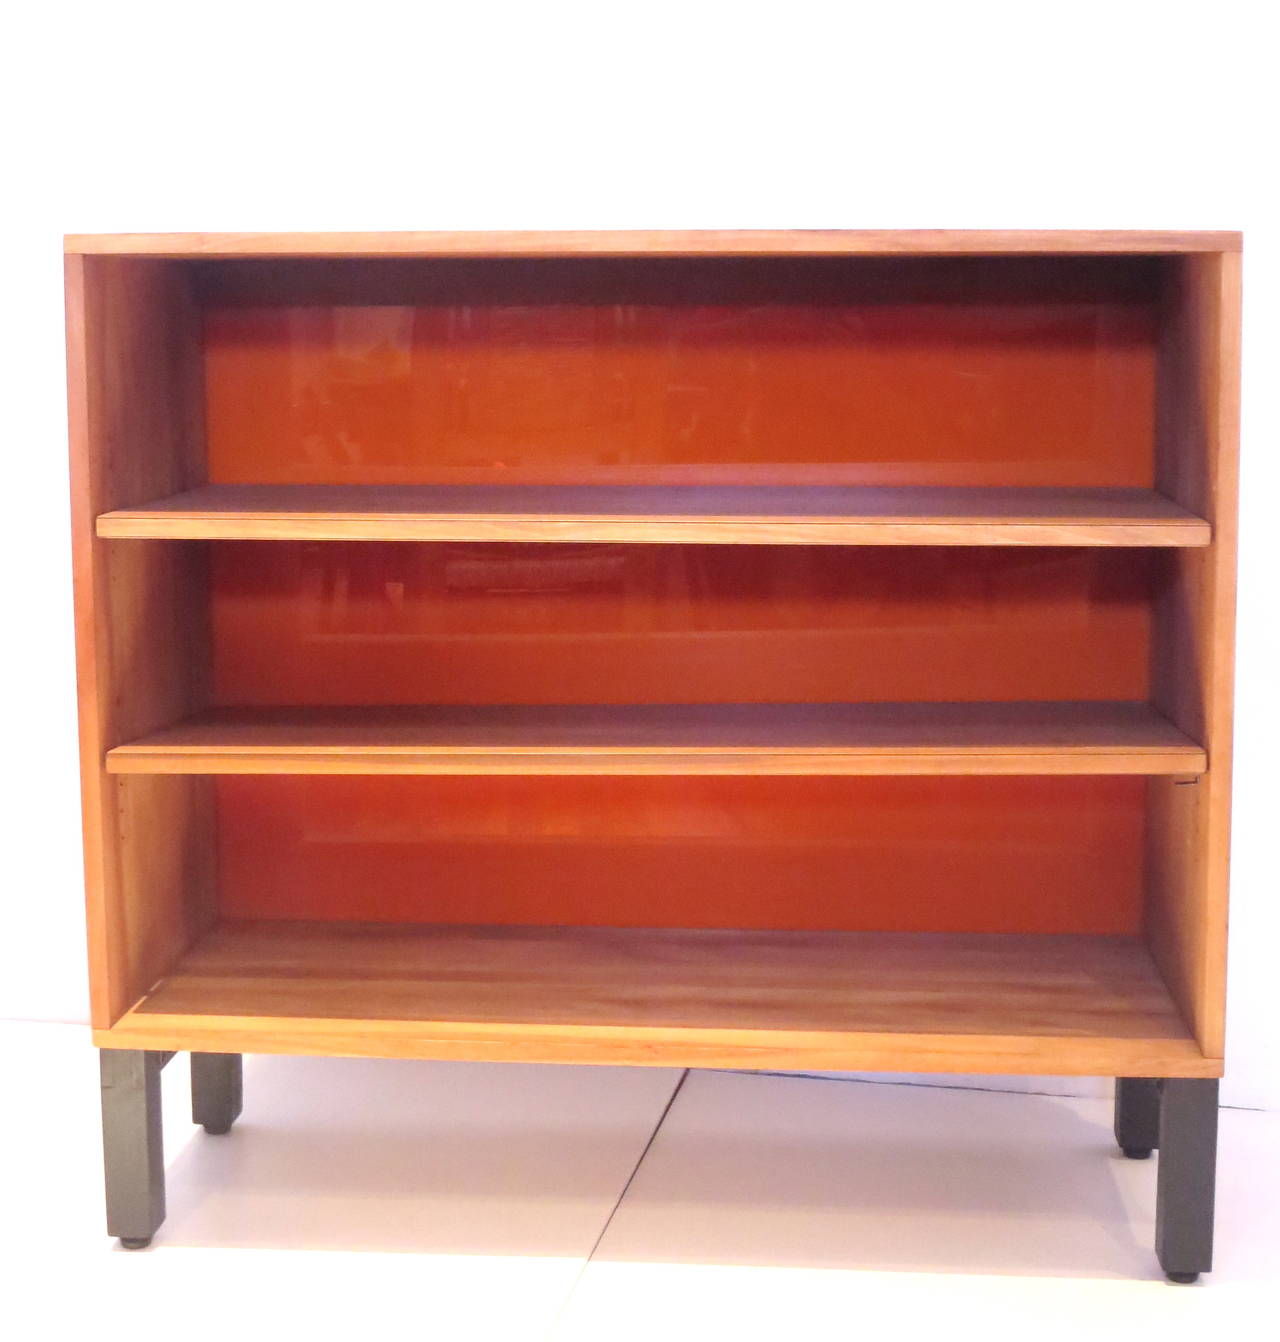 Striking double shelf solid ash wood book caze , excellent craftsmanship , solid 1